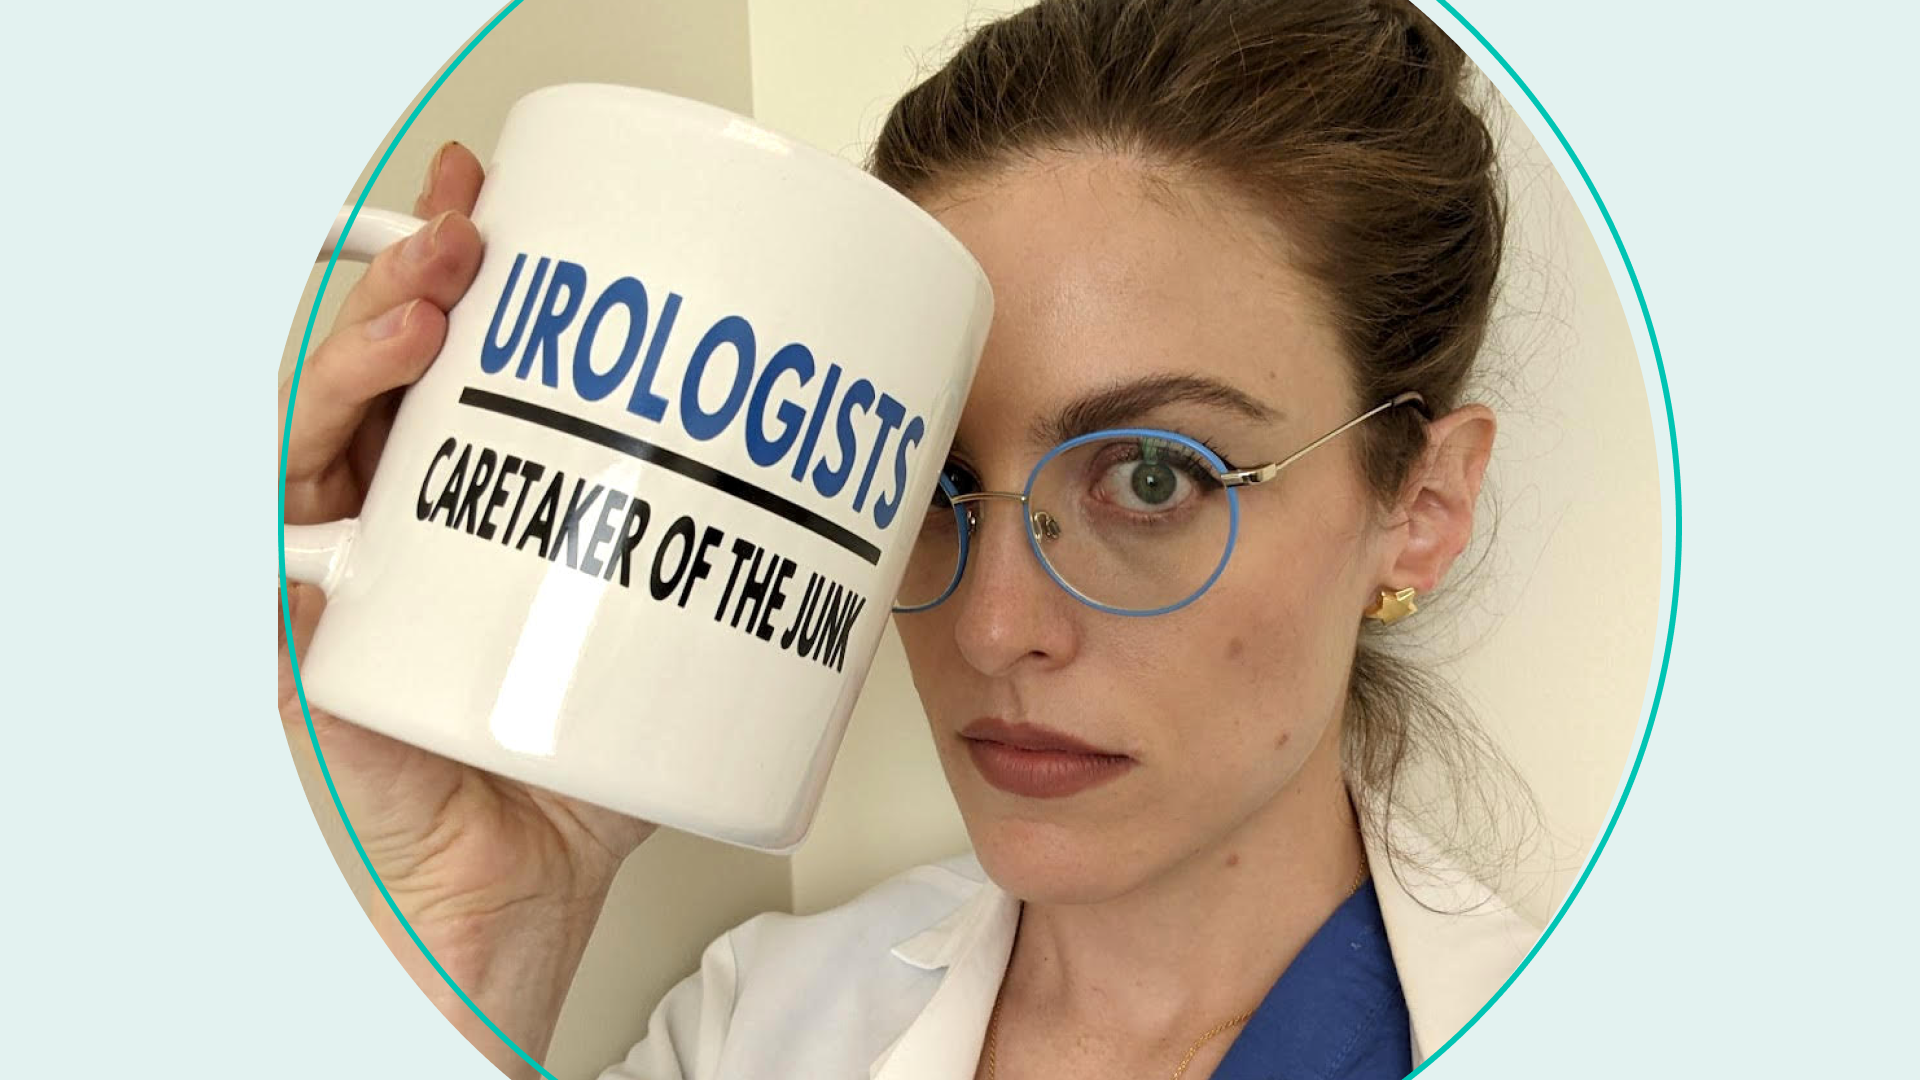 Woman holding up mug that says urologists caretaker of the junk 